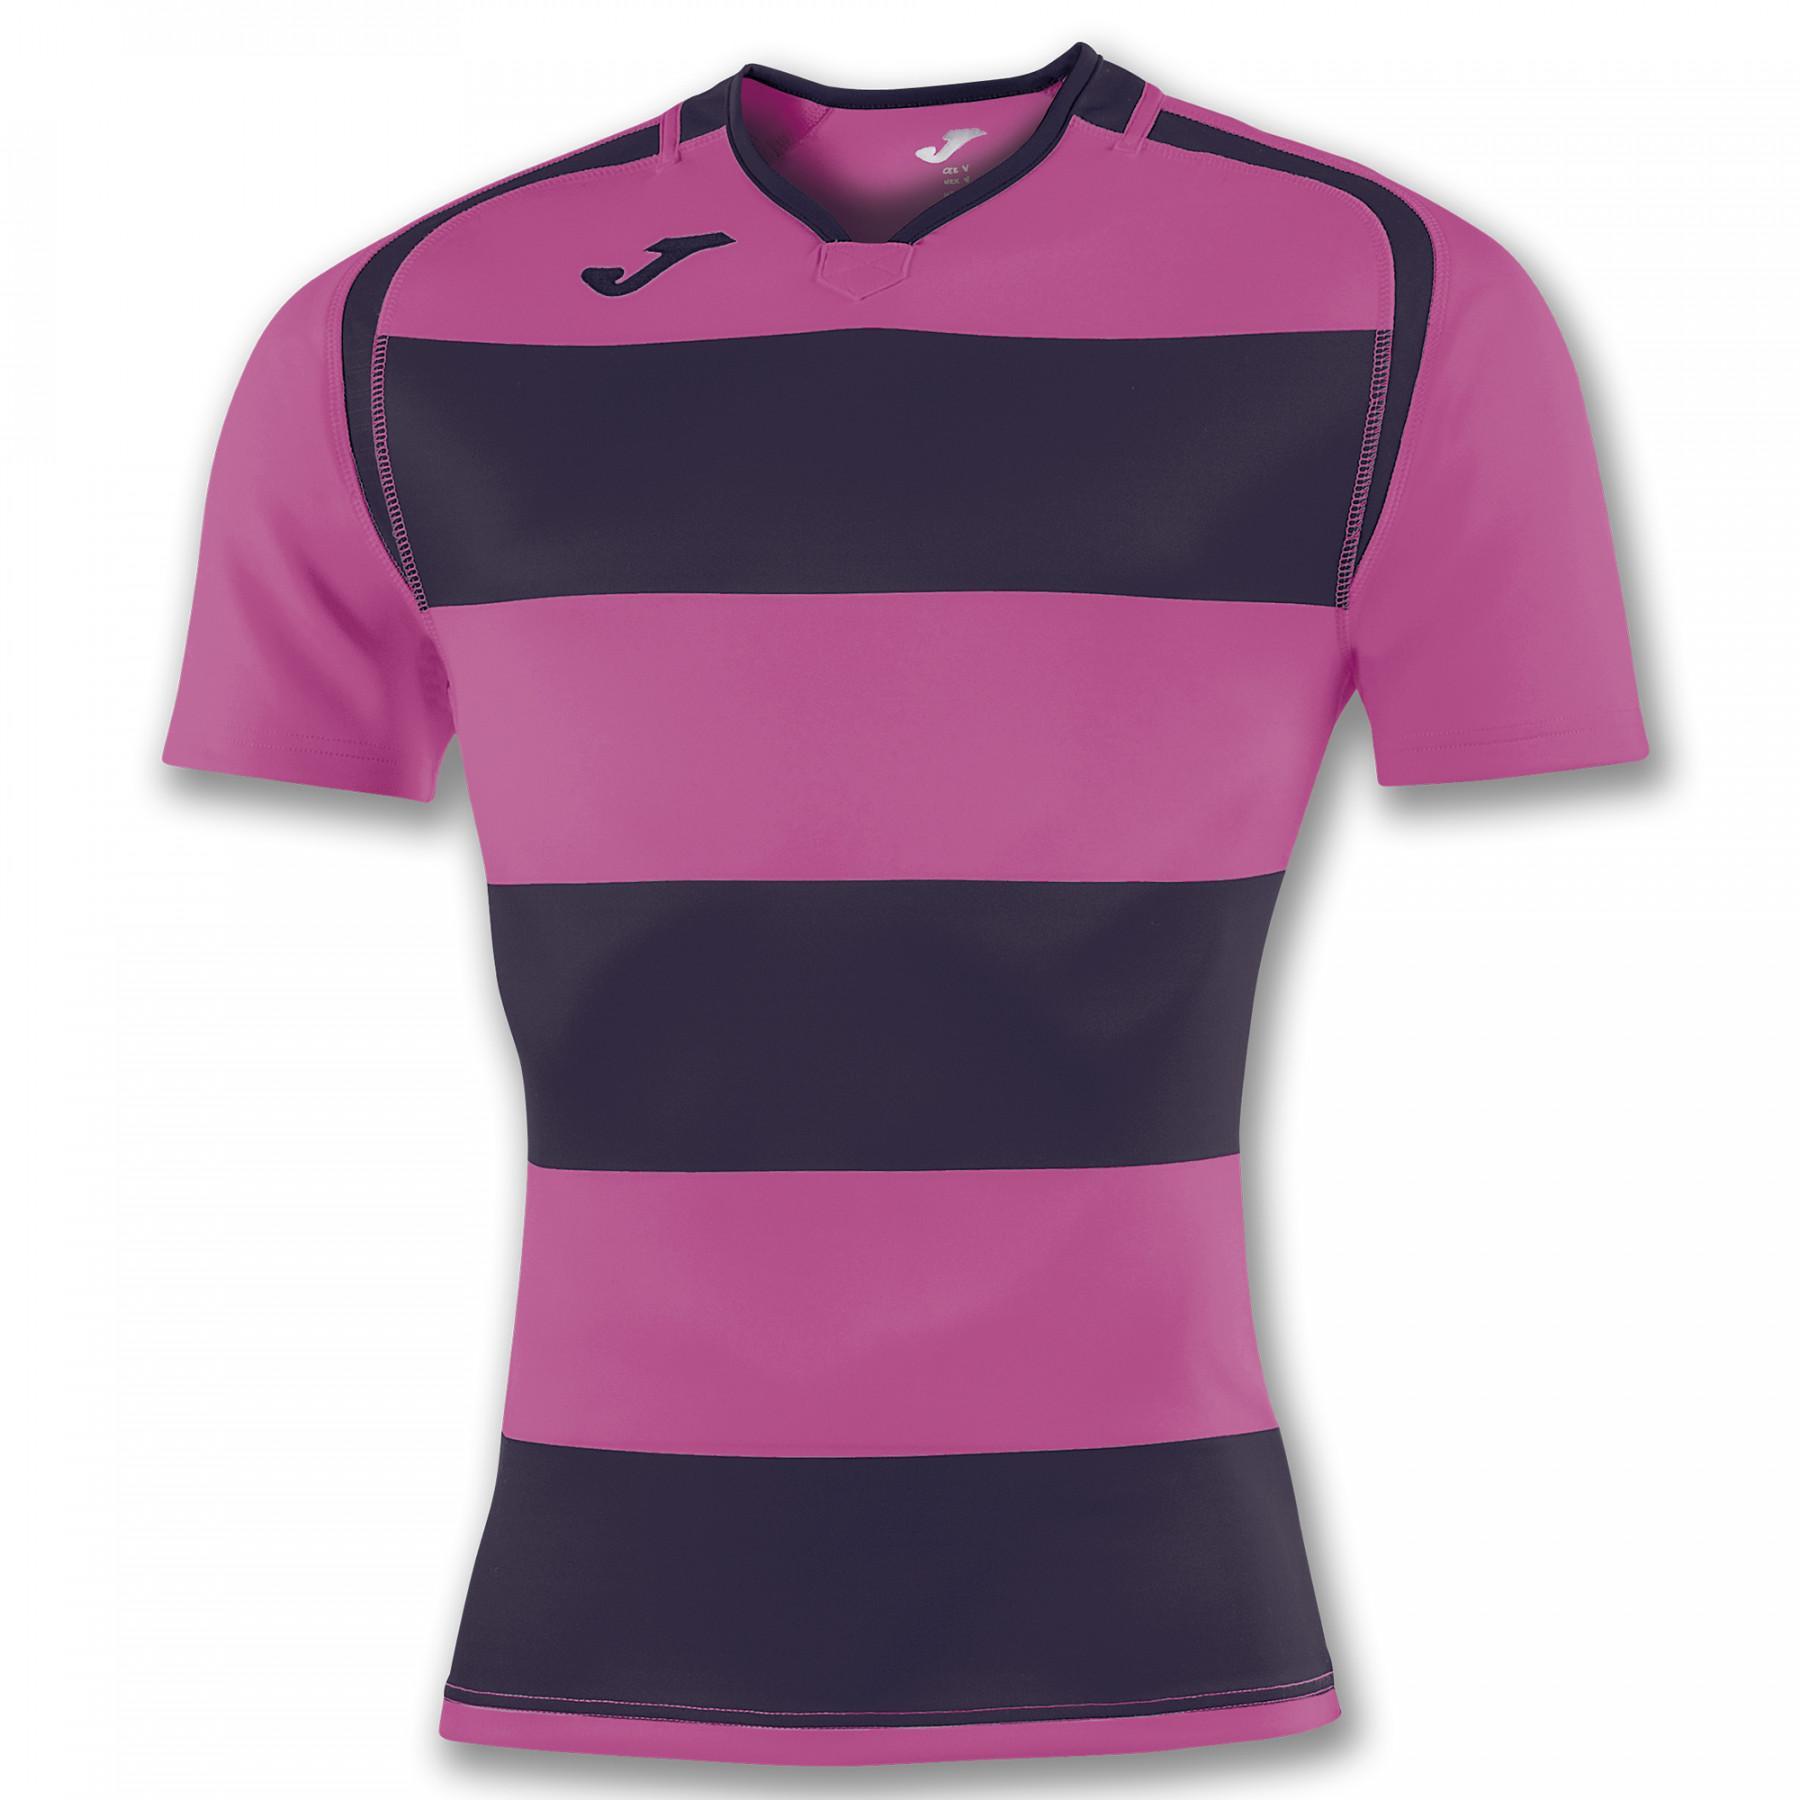 CamisetaJoma Rugby